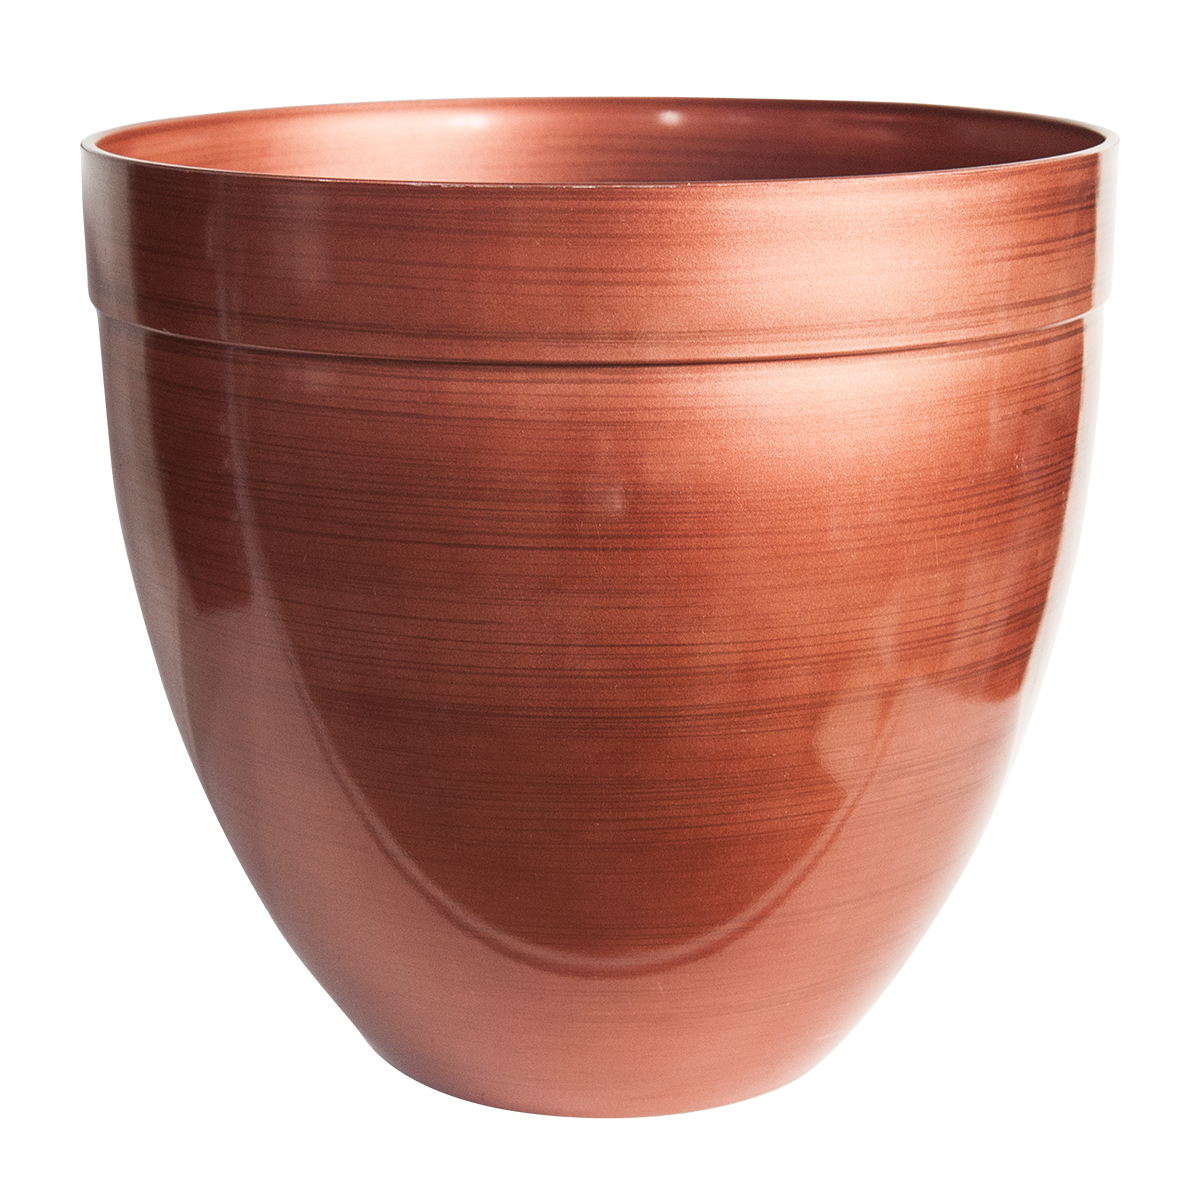 Plastic Glazed Ceramic Pots for Indoor Plants